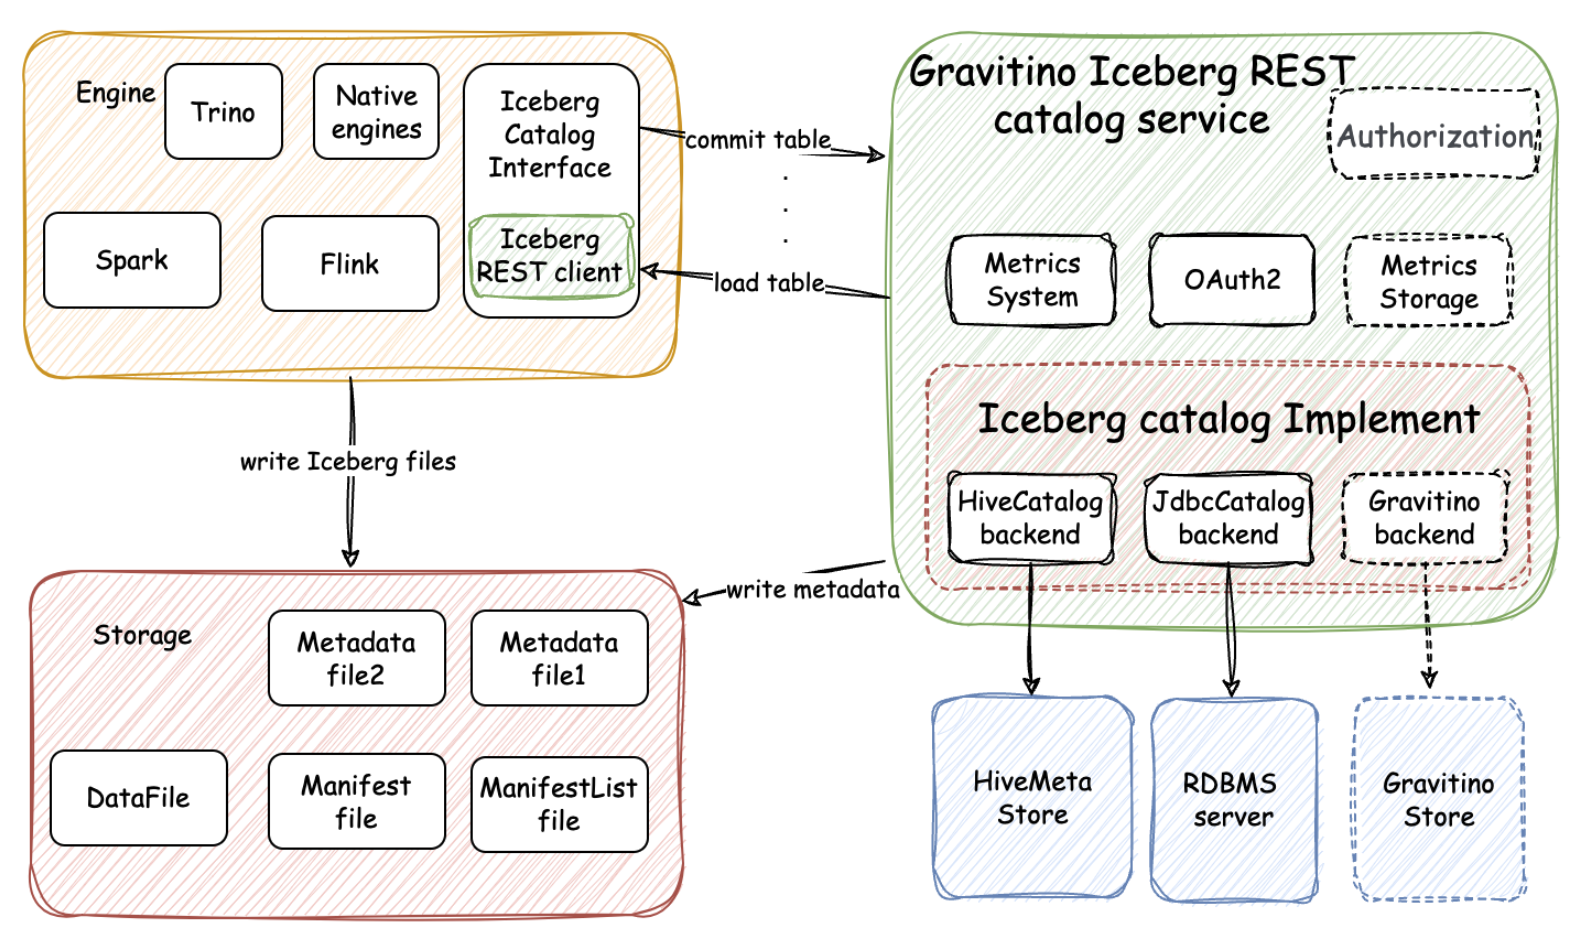 Gravitino Iceberg REST catalog service architecture